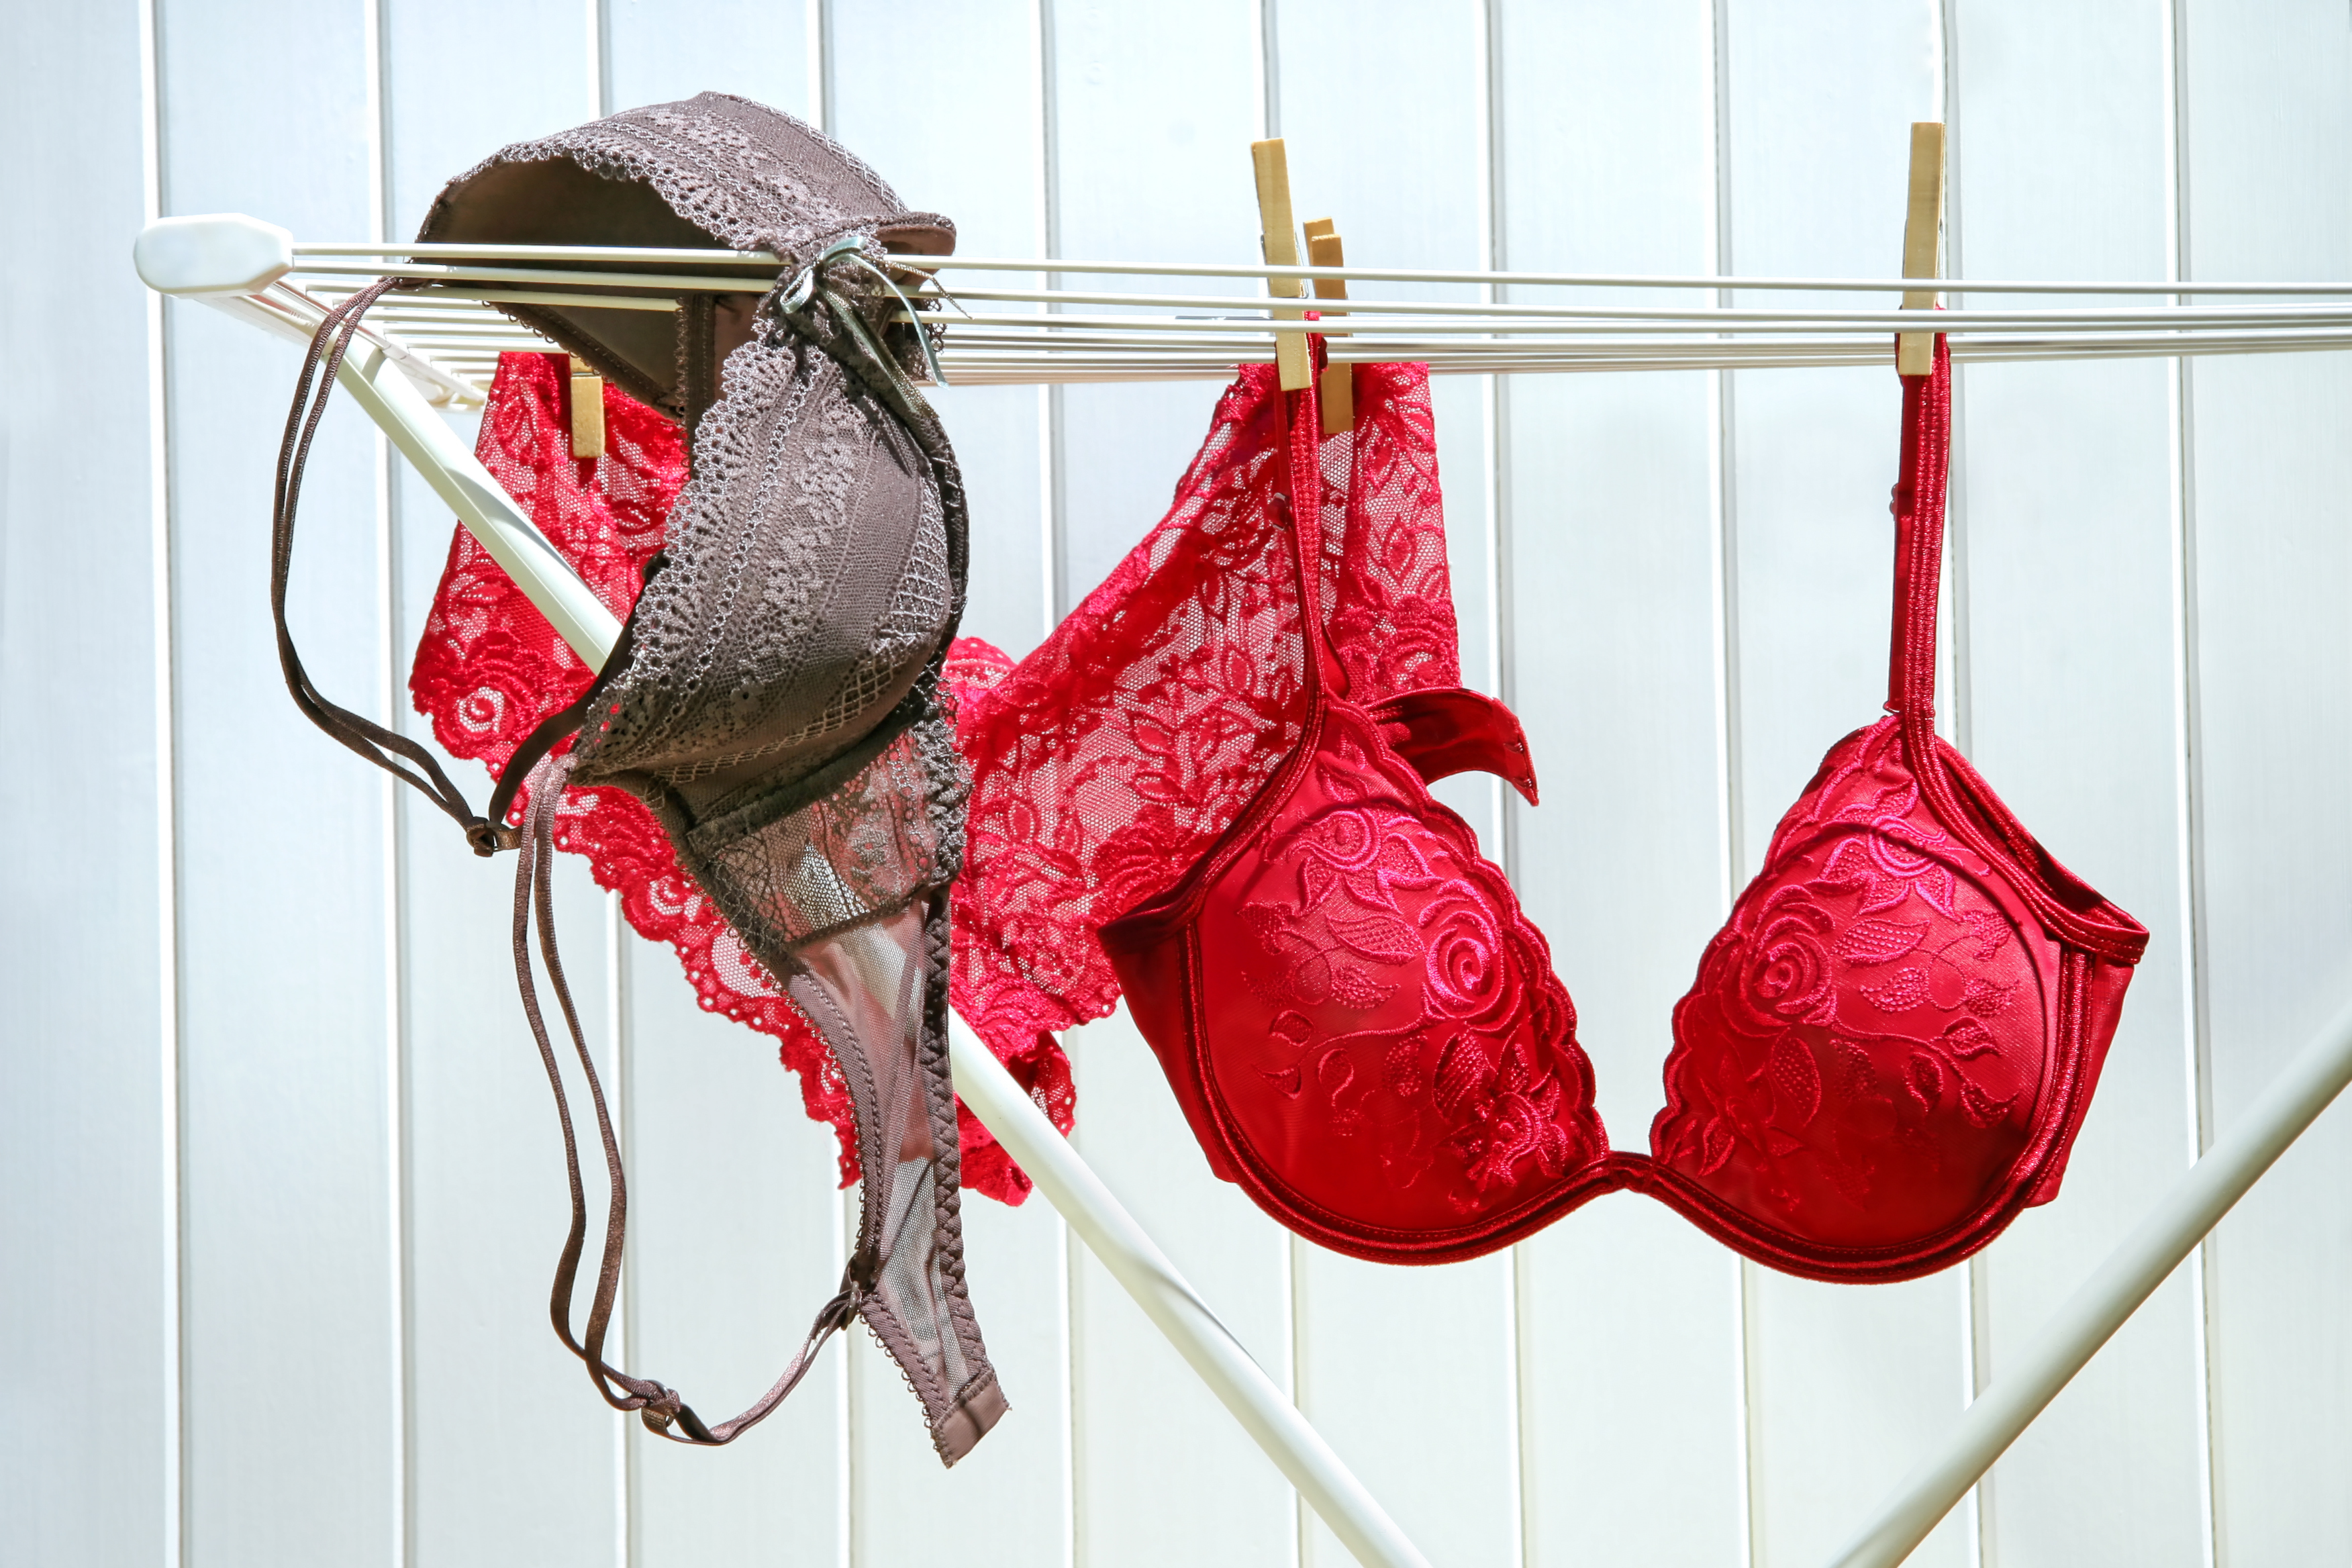 Porn girl in bras and underwear image